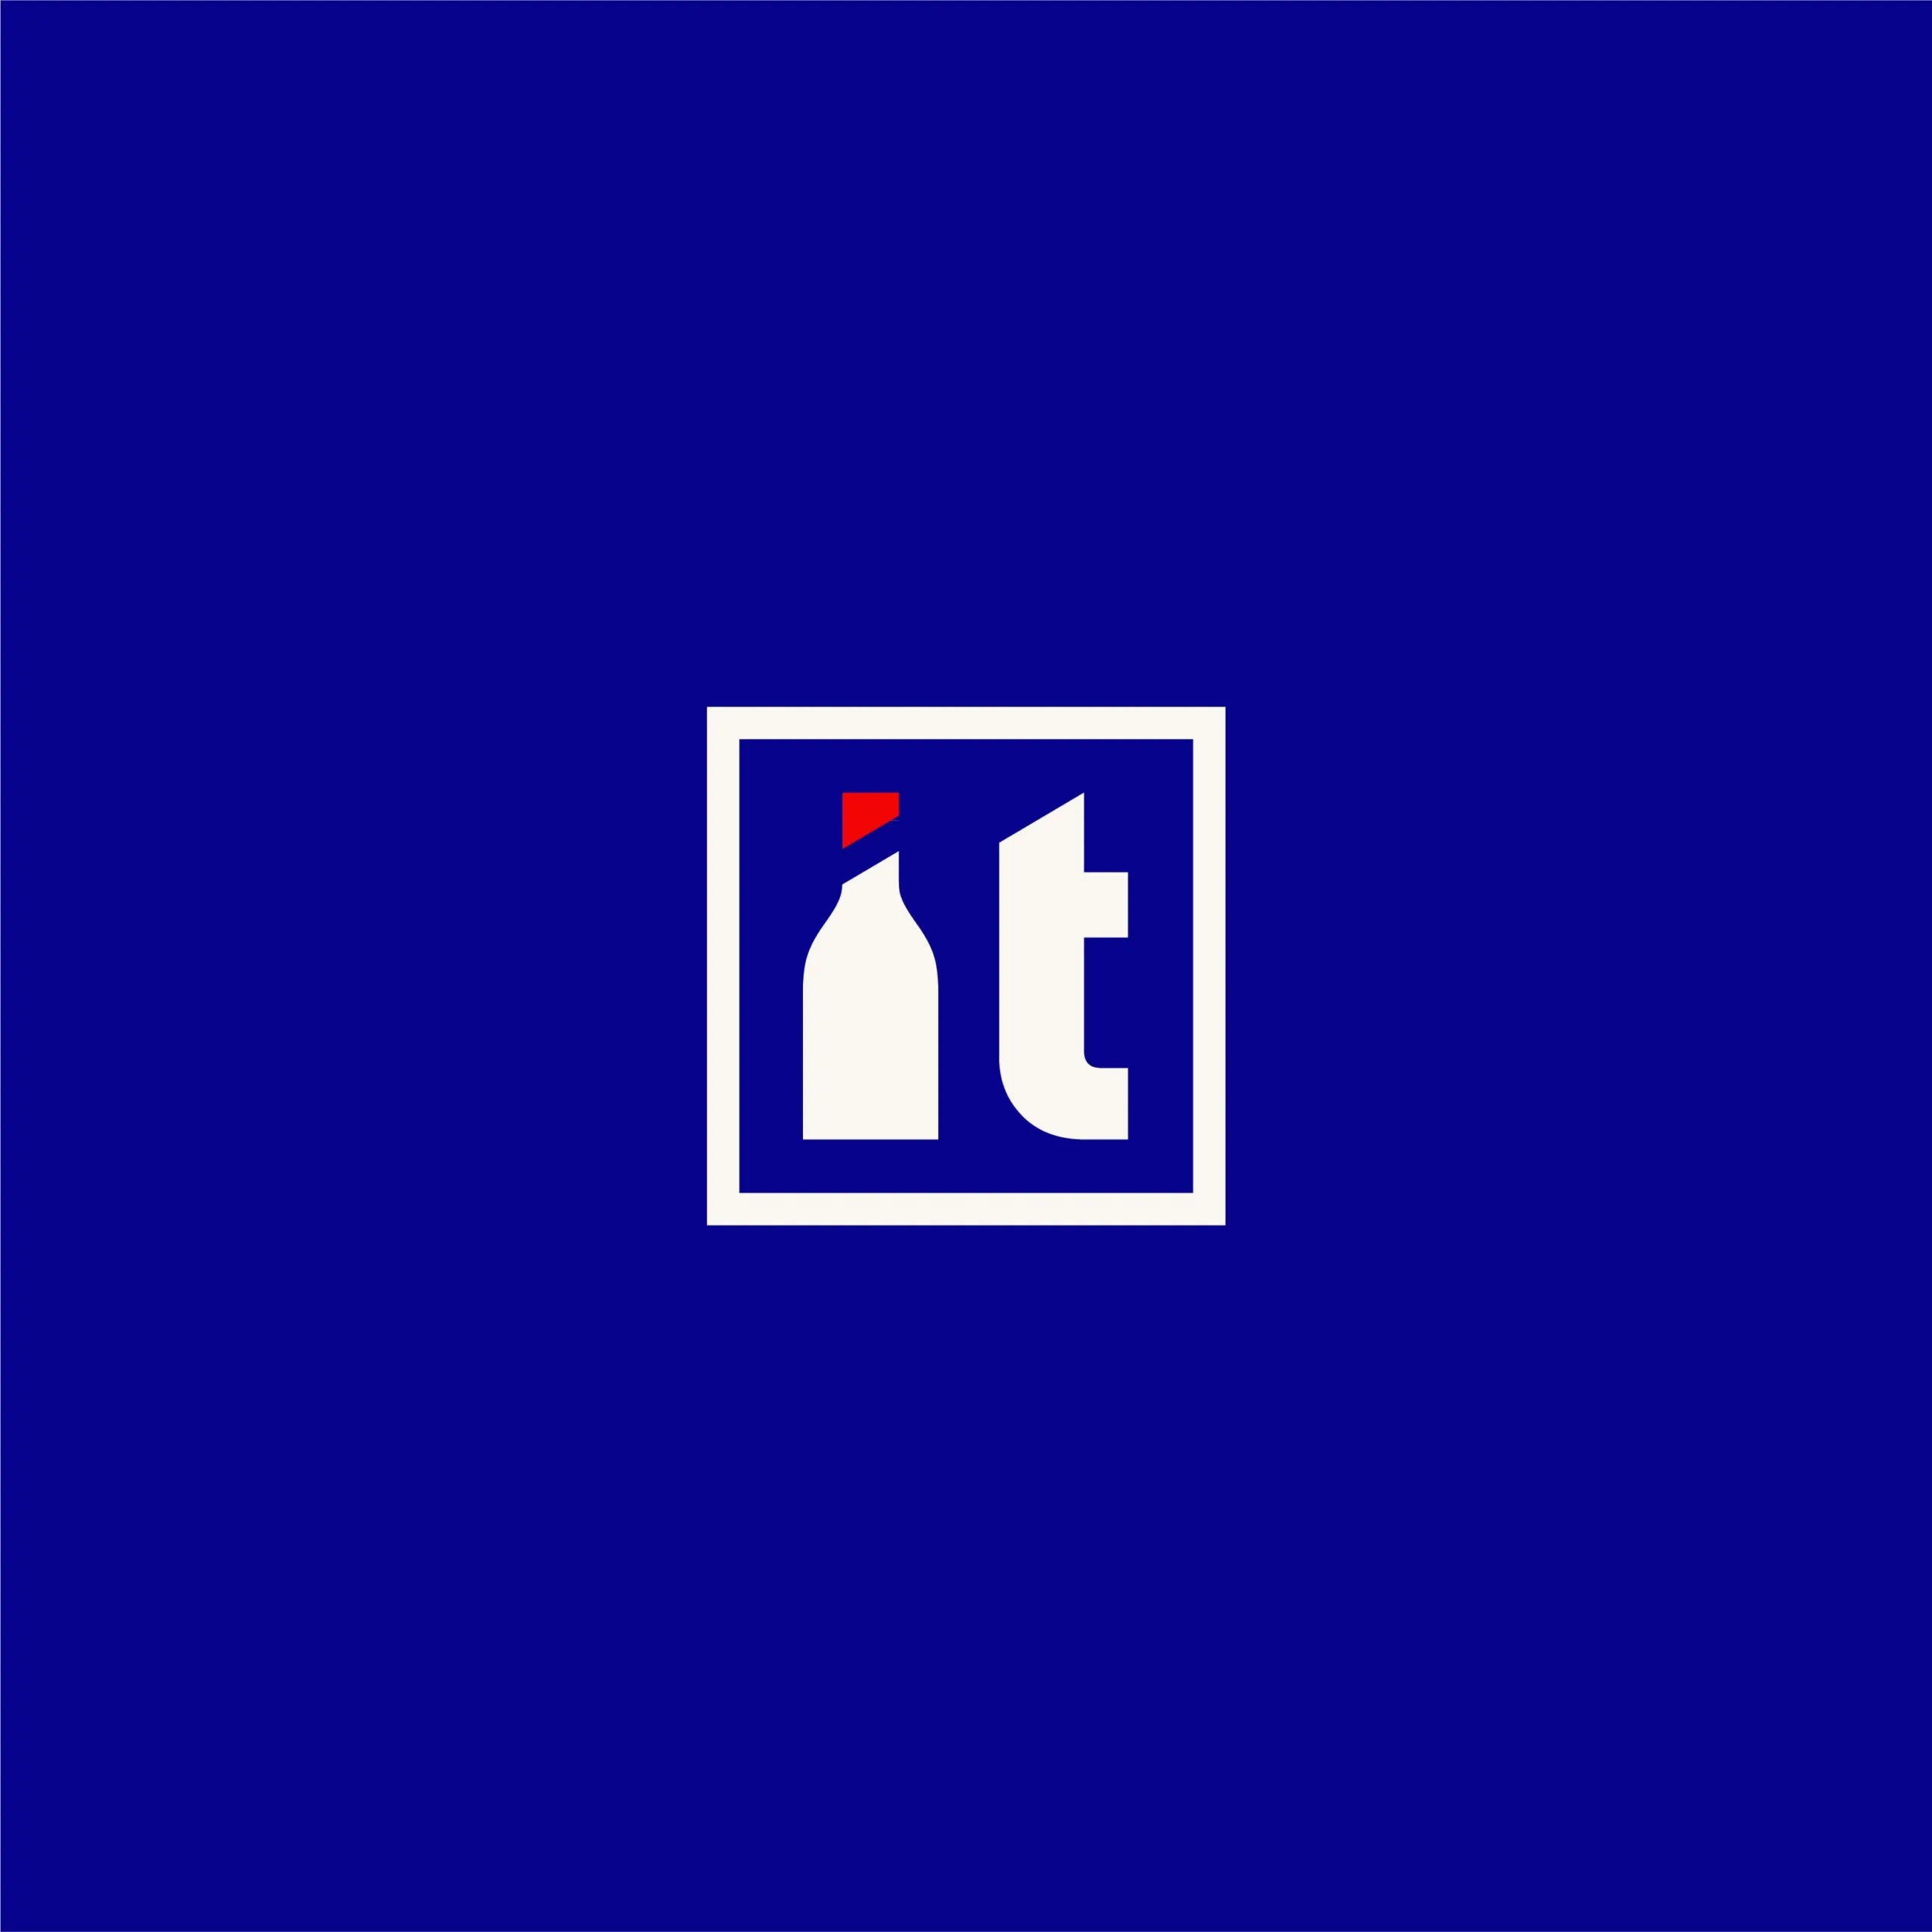 italializeme logo icon white blue square@3x scaled - Bärenstark - Advertising Agency from Karlsruhe Mühlburg